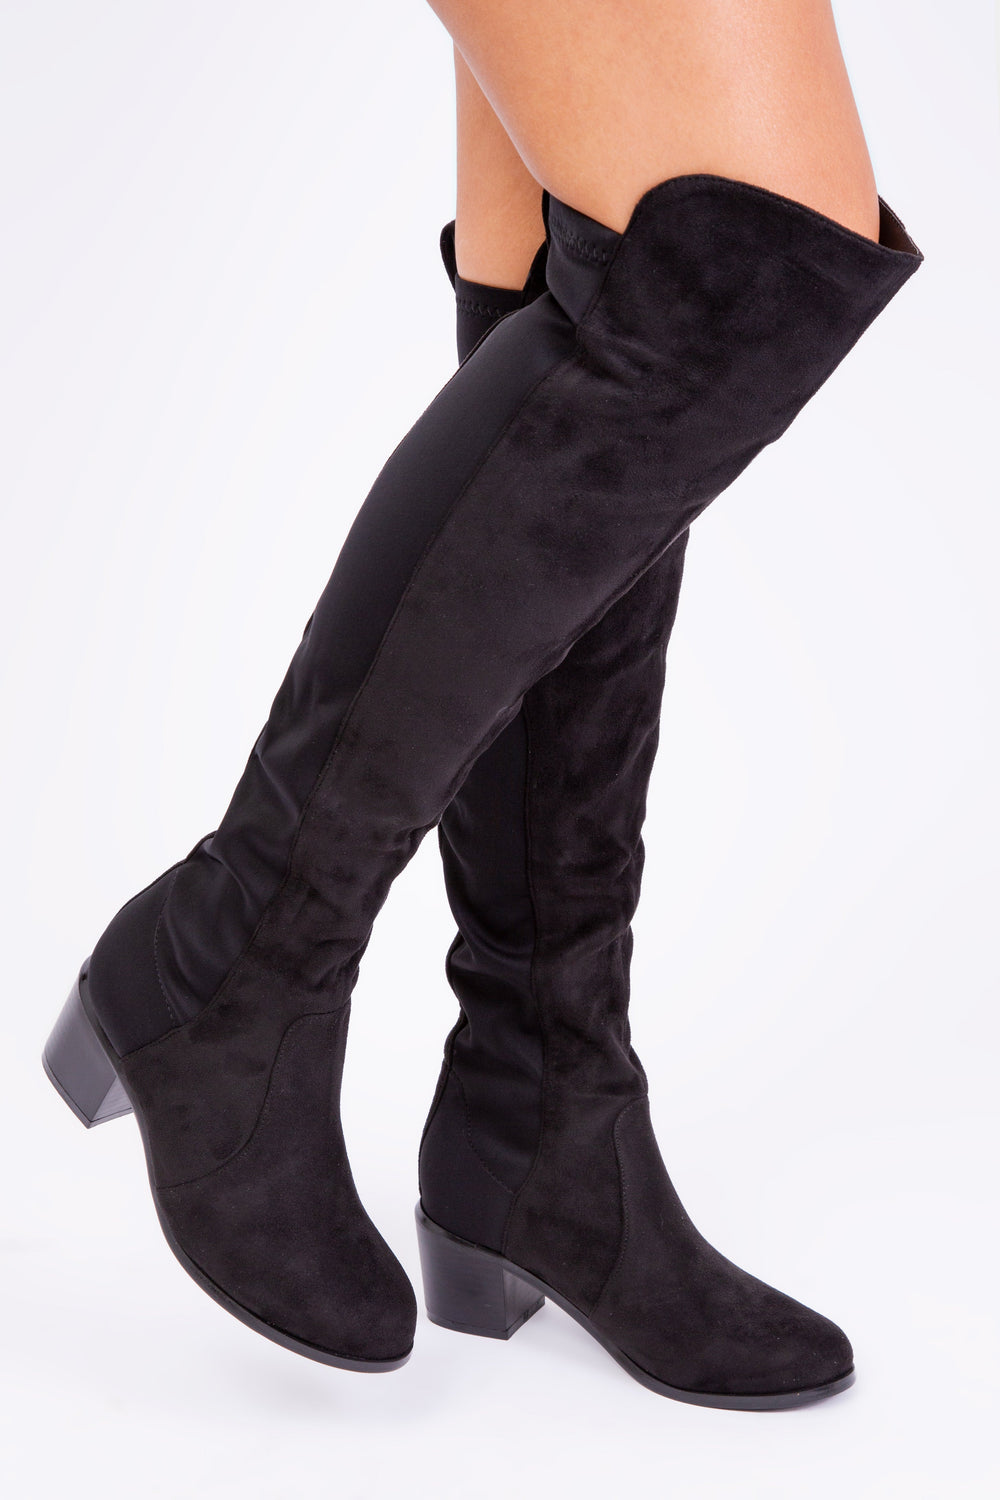 Mark Black Stretch Pointy Toe Stocking High Heel Thigh High Boots 7-11 |  eBay